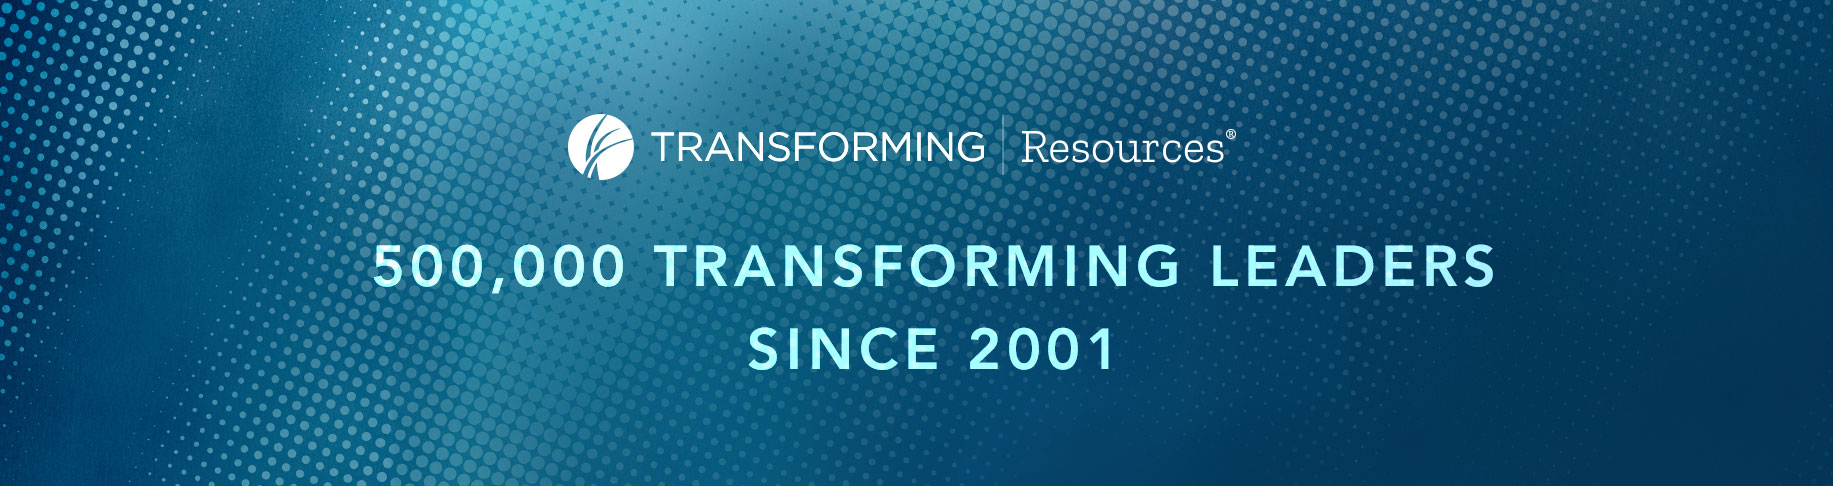 Transforming Resources